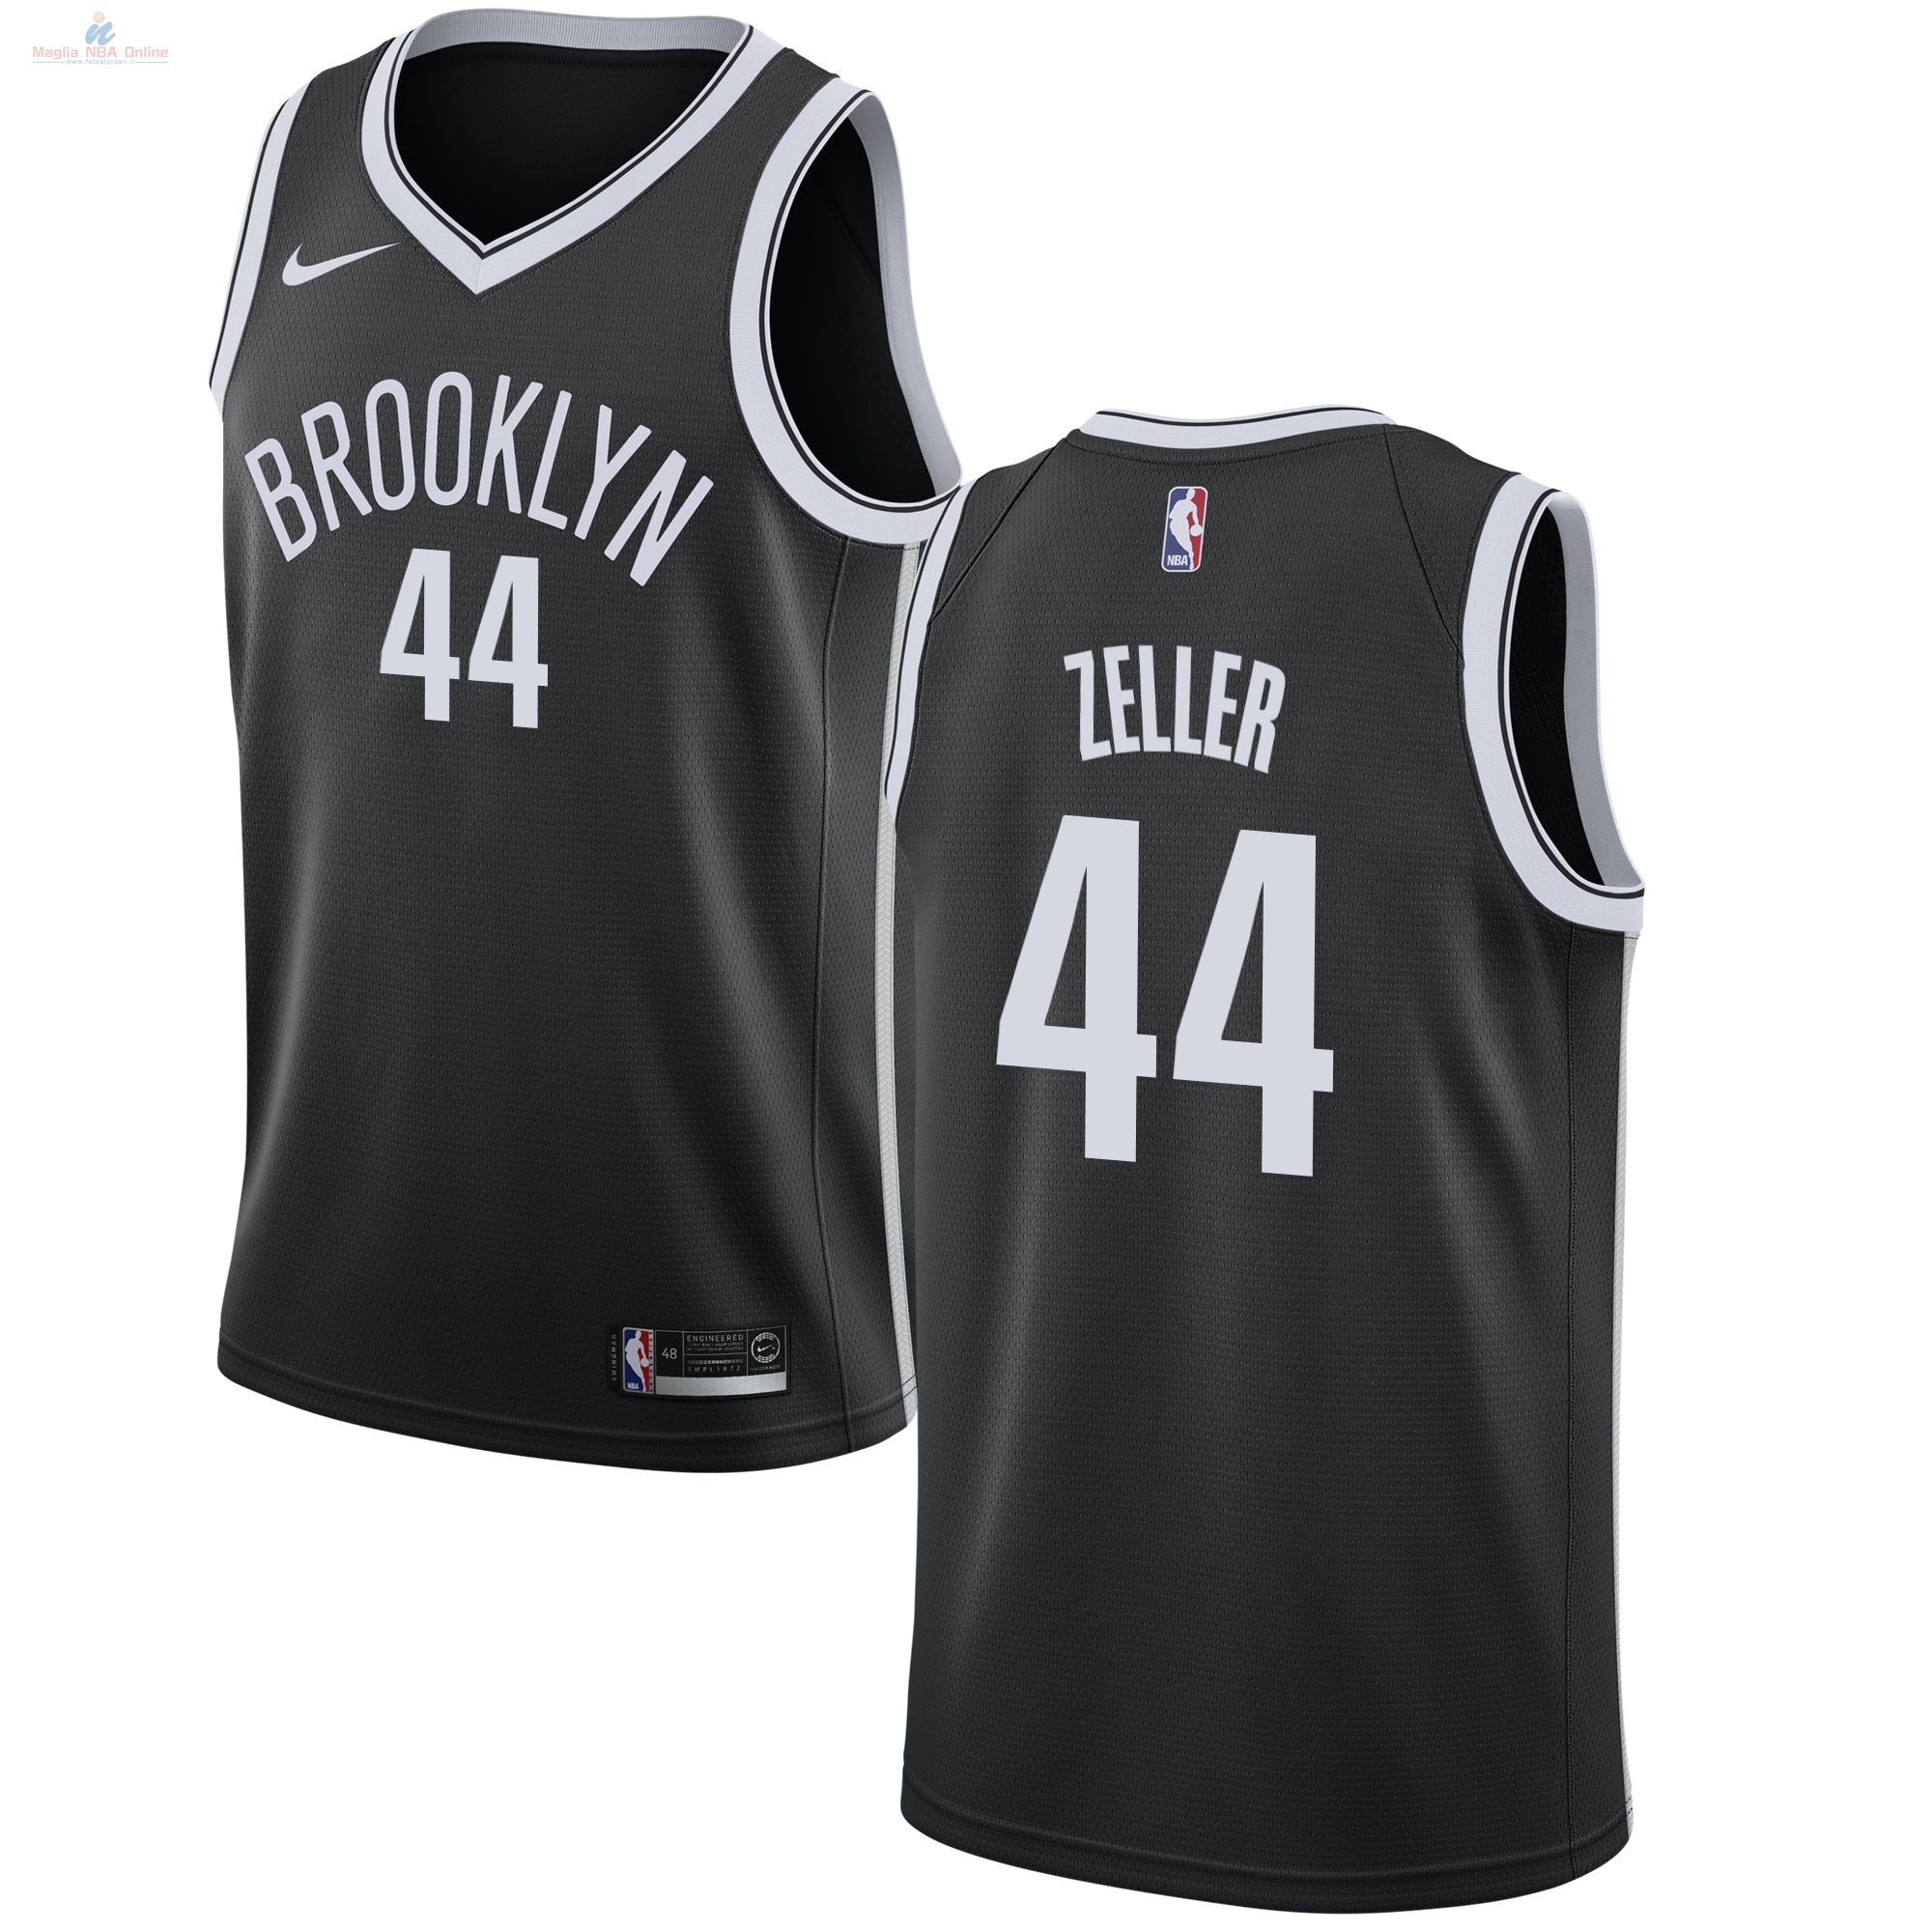 Acquista Maglia NBA Nike Brooklyn Nets #44 Tyler Zeller Nero Icon